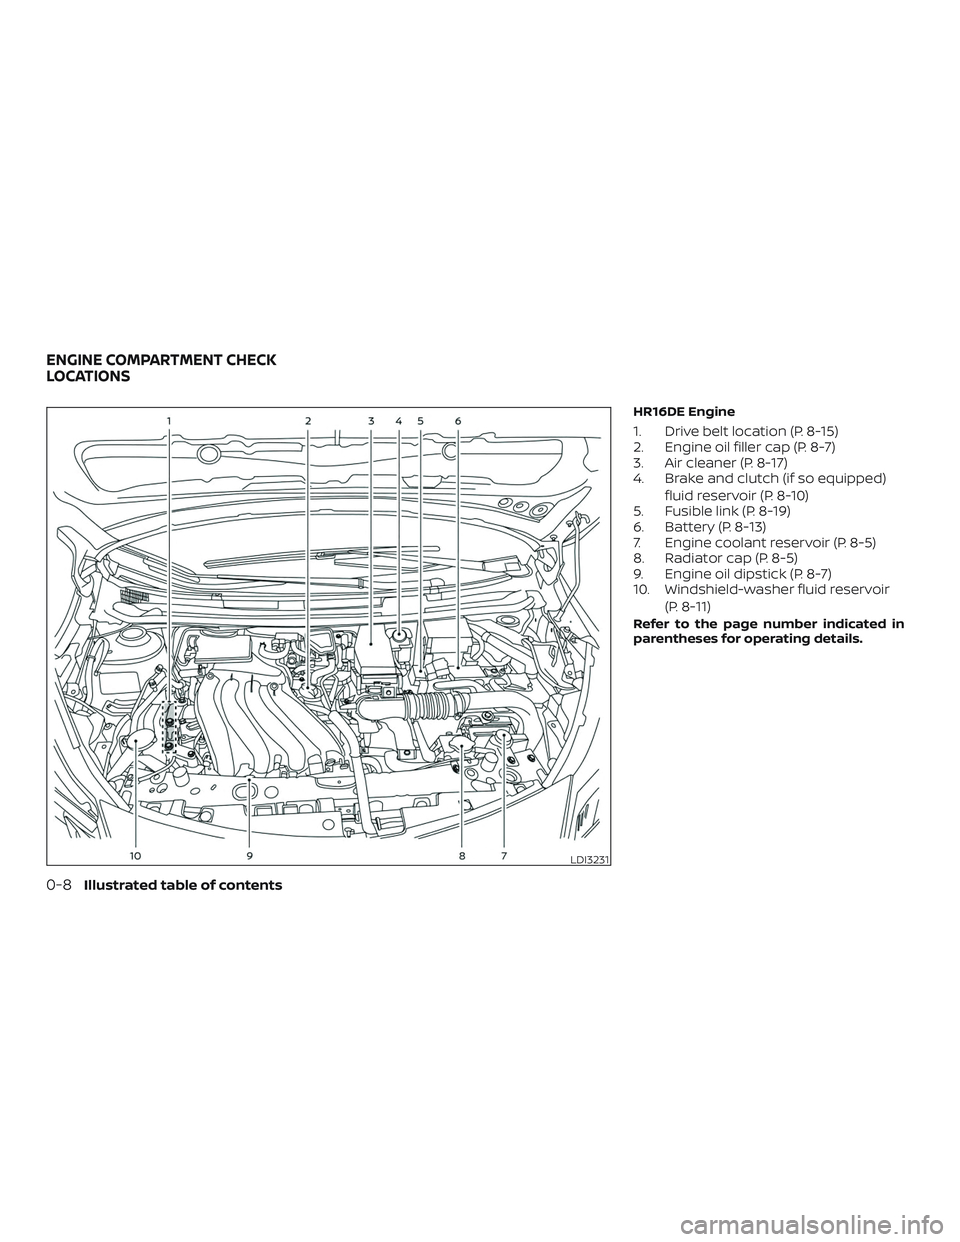 NISSAN VERSA 2019  Owners Manual HR16DE Engine
1. Drive belt location (P. 8-15)
2. Engine oil filler cap (P. 8-7)
3. Air cleaner (P. 8-17)
4. Brake and clutch (if so equipped)fluid reservoir (P. 8-10)
5. Fusible link (P. 8-19)
6. Bat